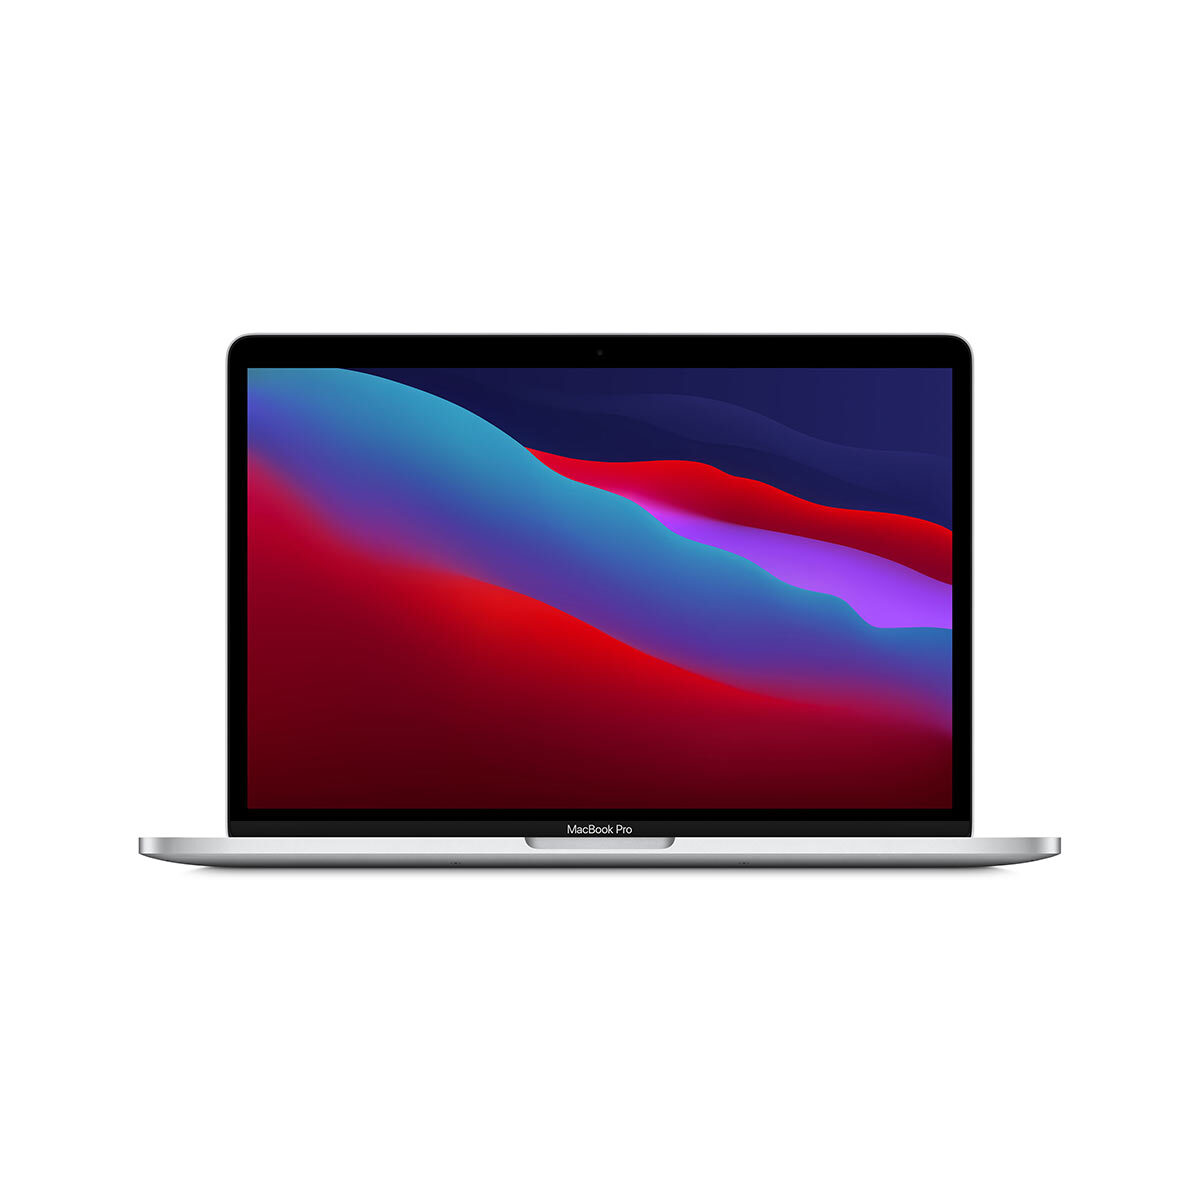 Buy Apple MacBook Pro 2020, Apple M1 Chip, 16GB RAM, 1TB SSD, 13.3 Inch in Silver, Z11D2000780090 at costco.co.uk